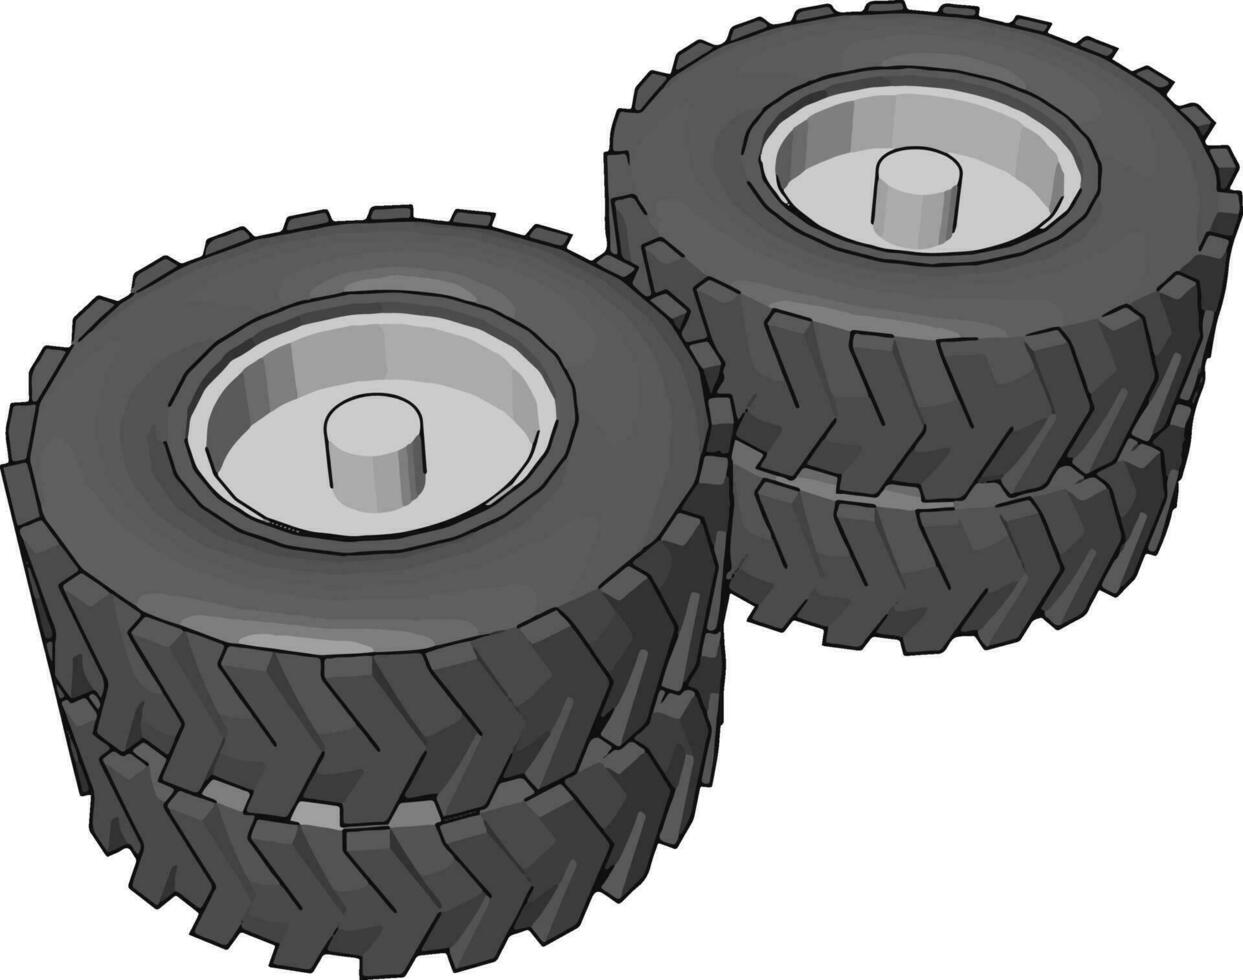 Truck tires, illustration, vector on white background.